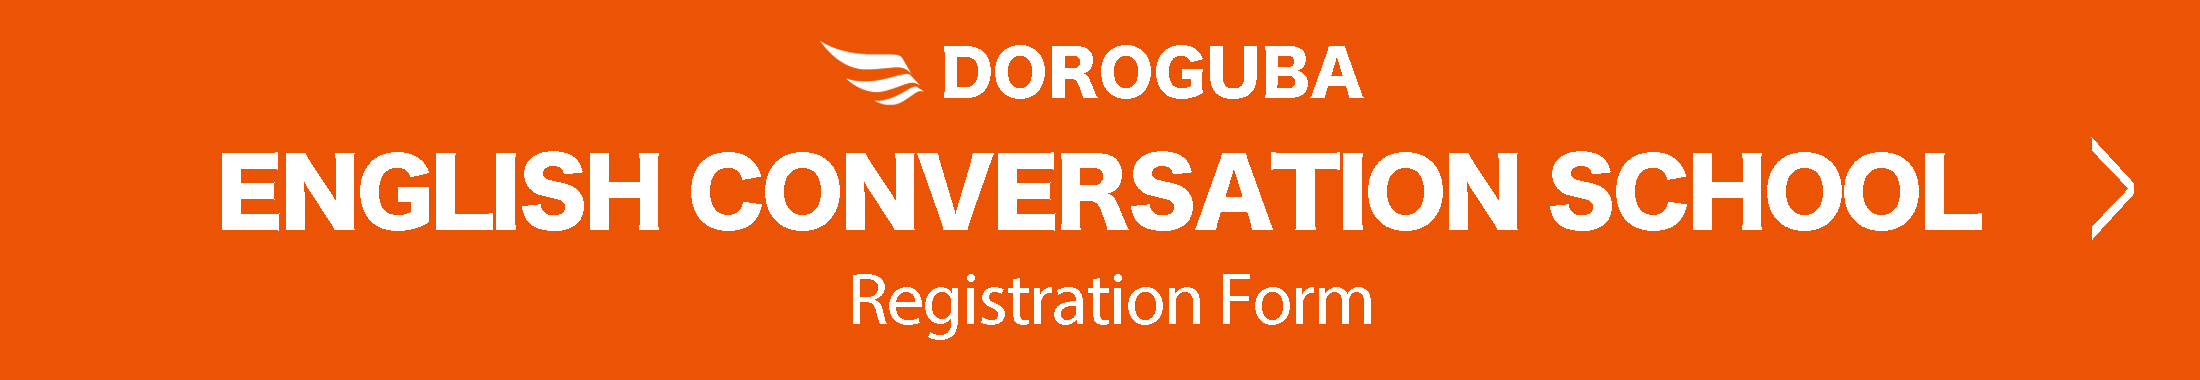 doroguba ENGLISH CONVERSATION SCHOOL Registration Form